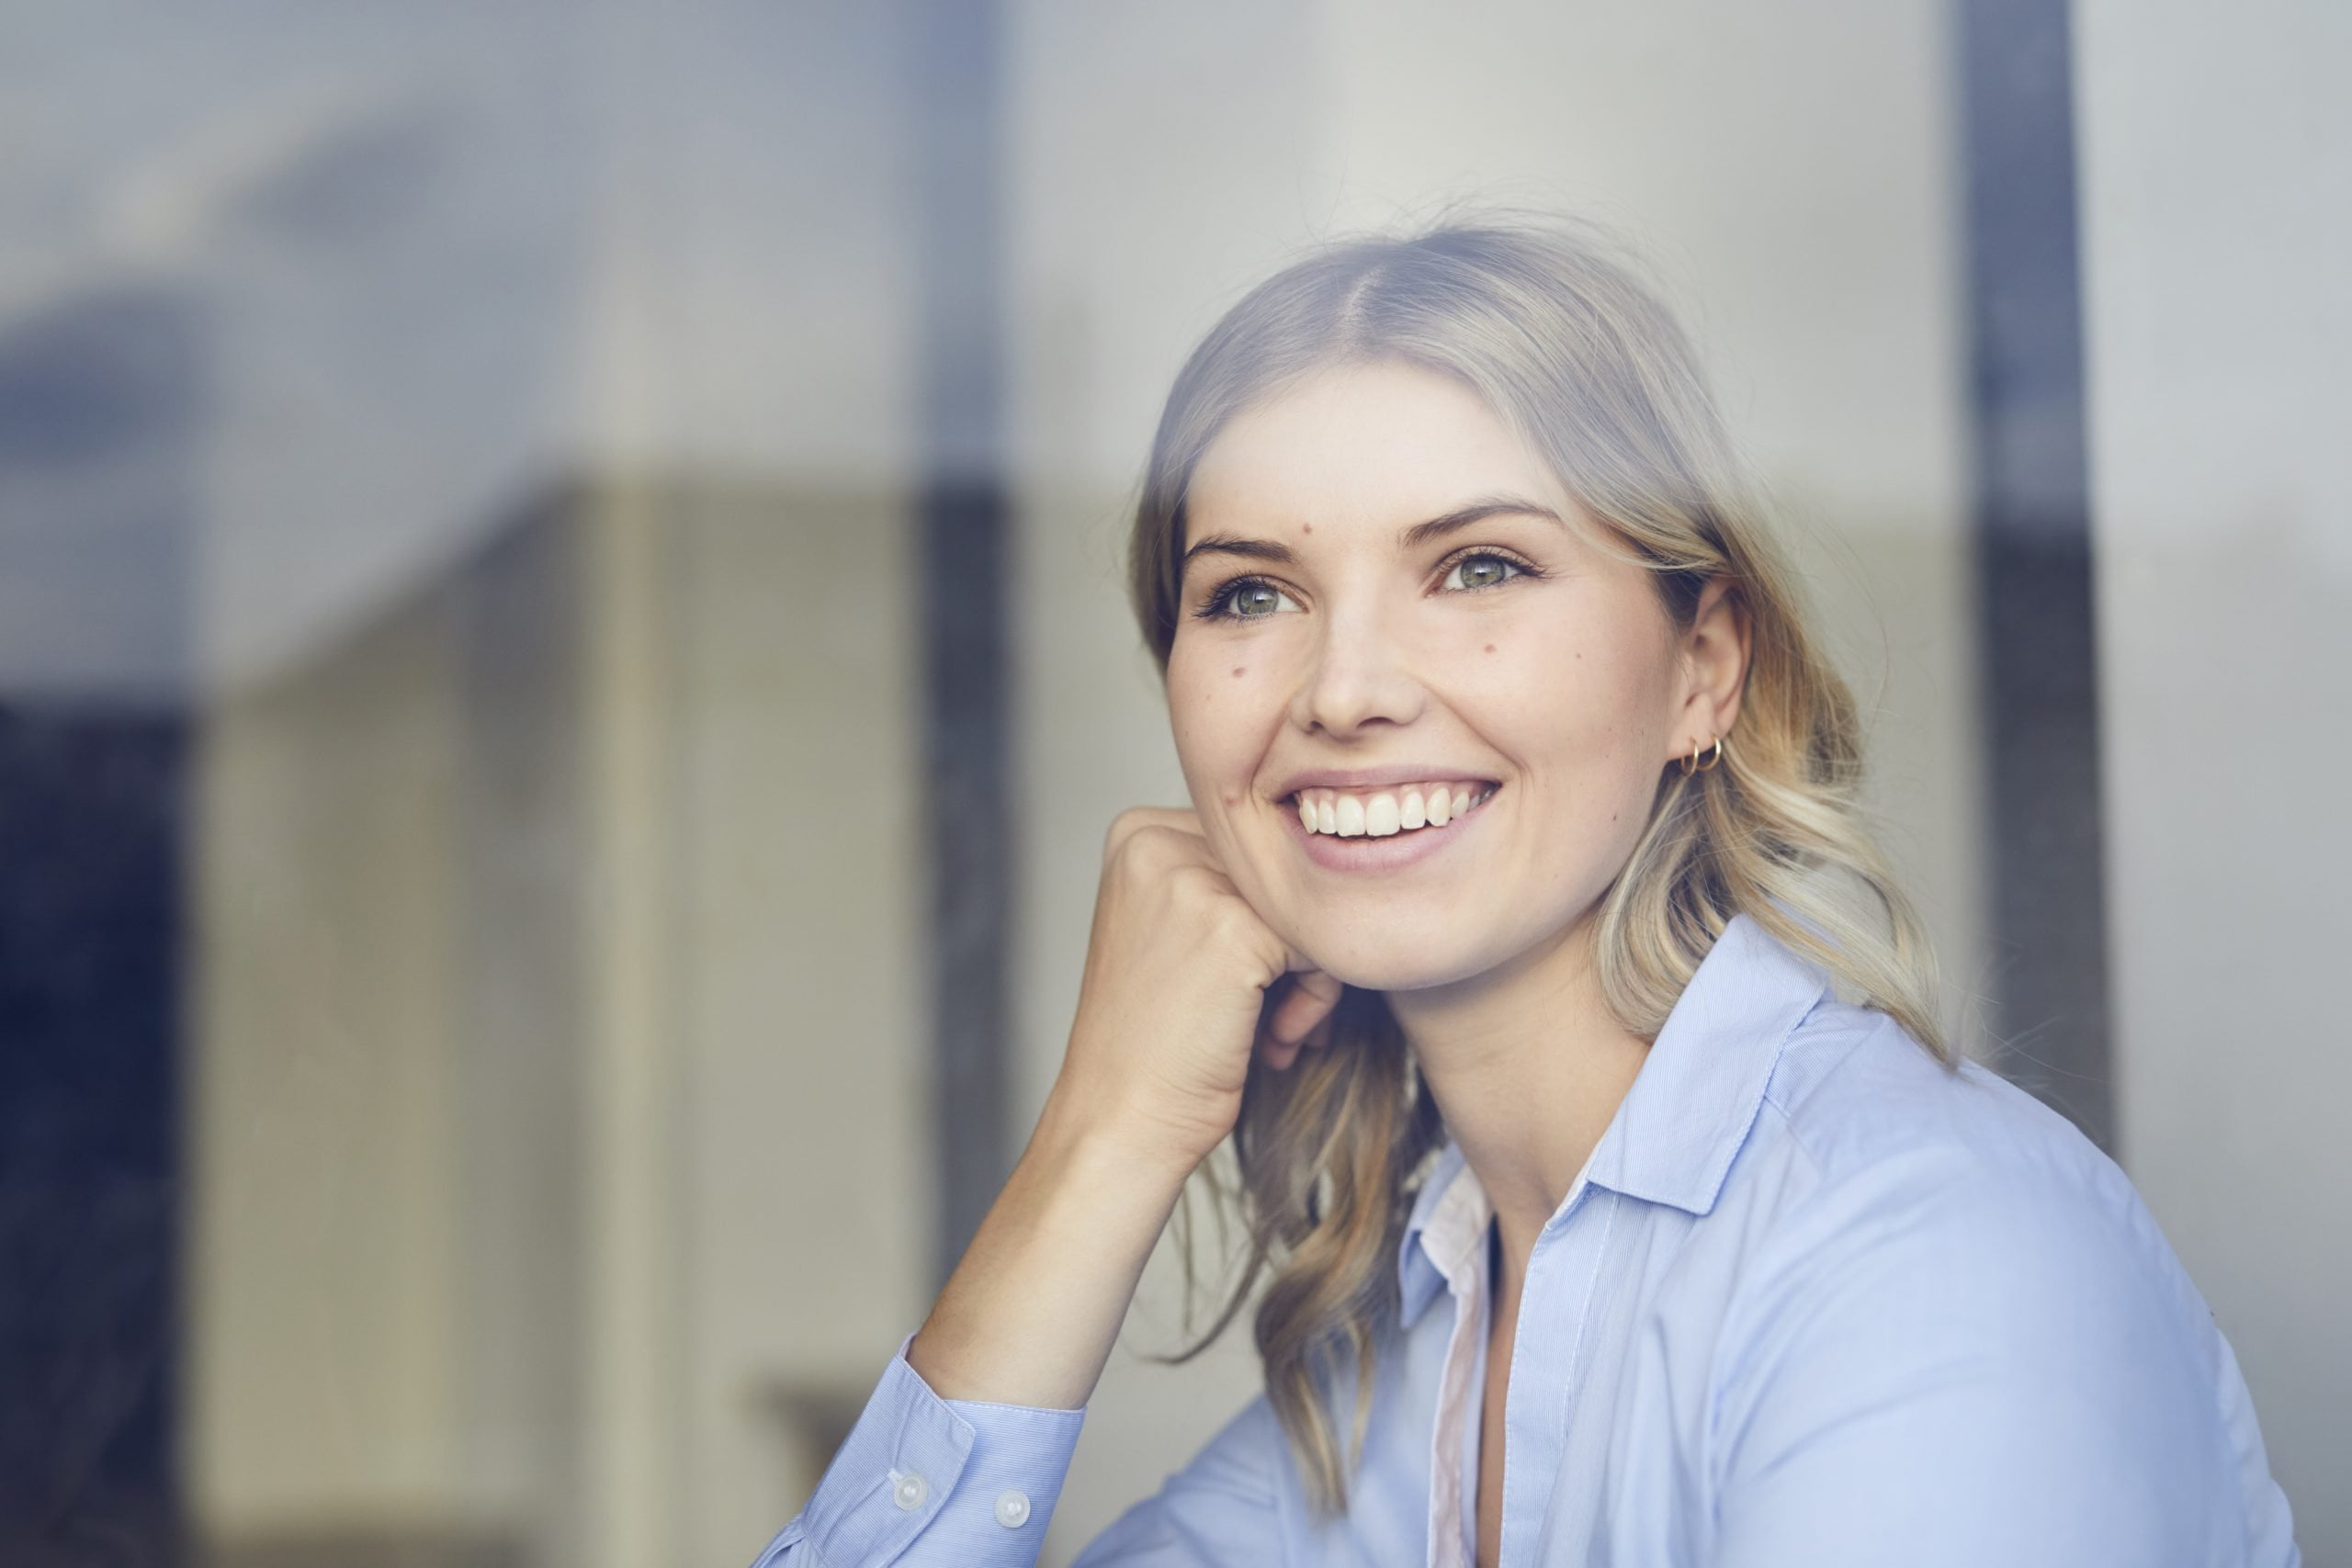 Portrait of a smiling woman, illustrating Lightbody Women's Mental Health blog.